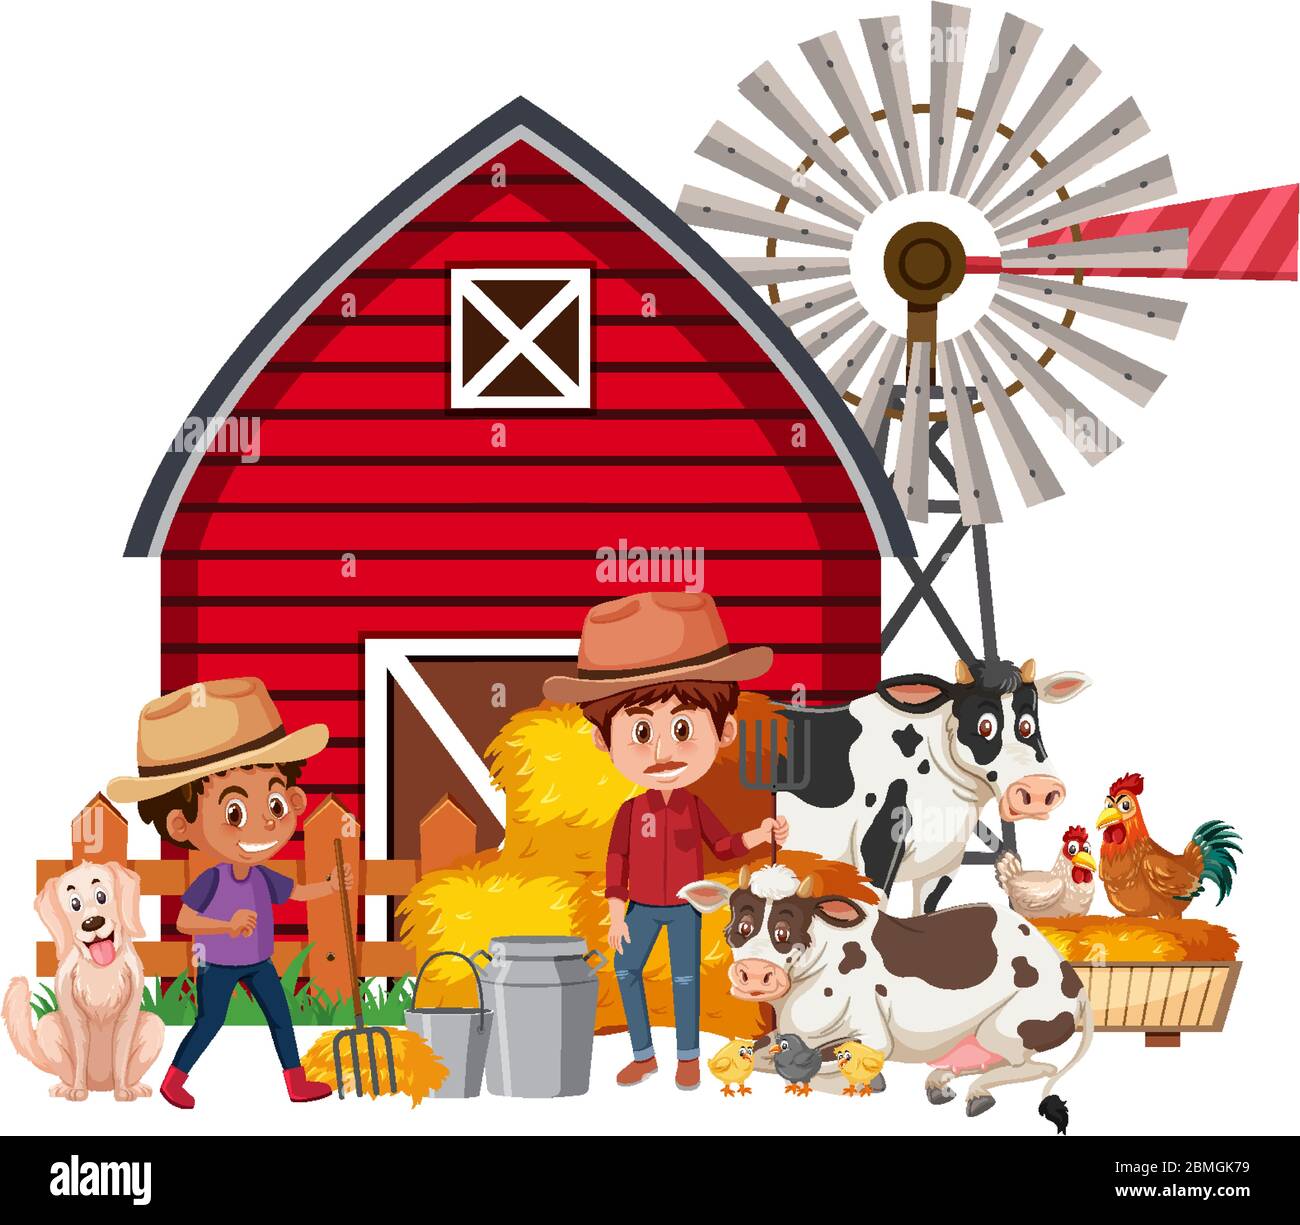 Scene with farmers and farm animals on the farm illustration Stock Vector